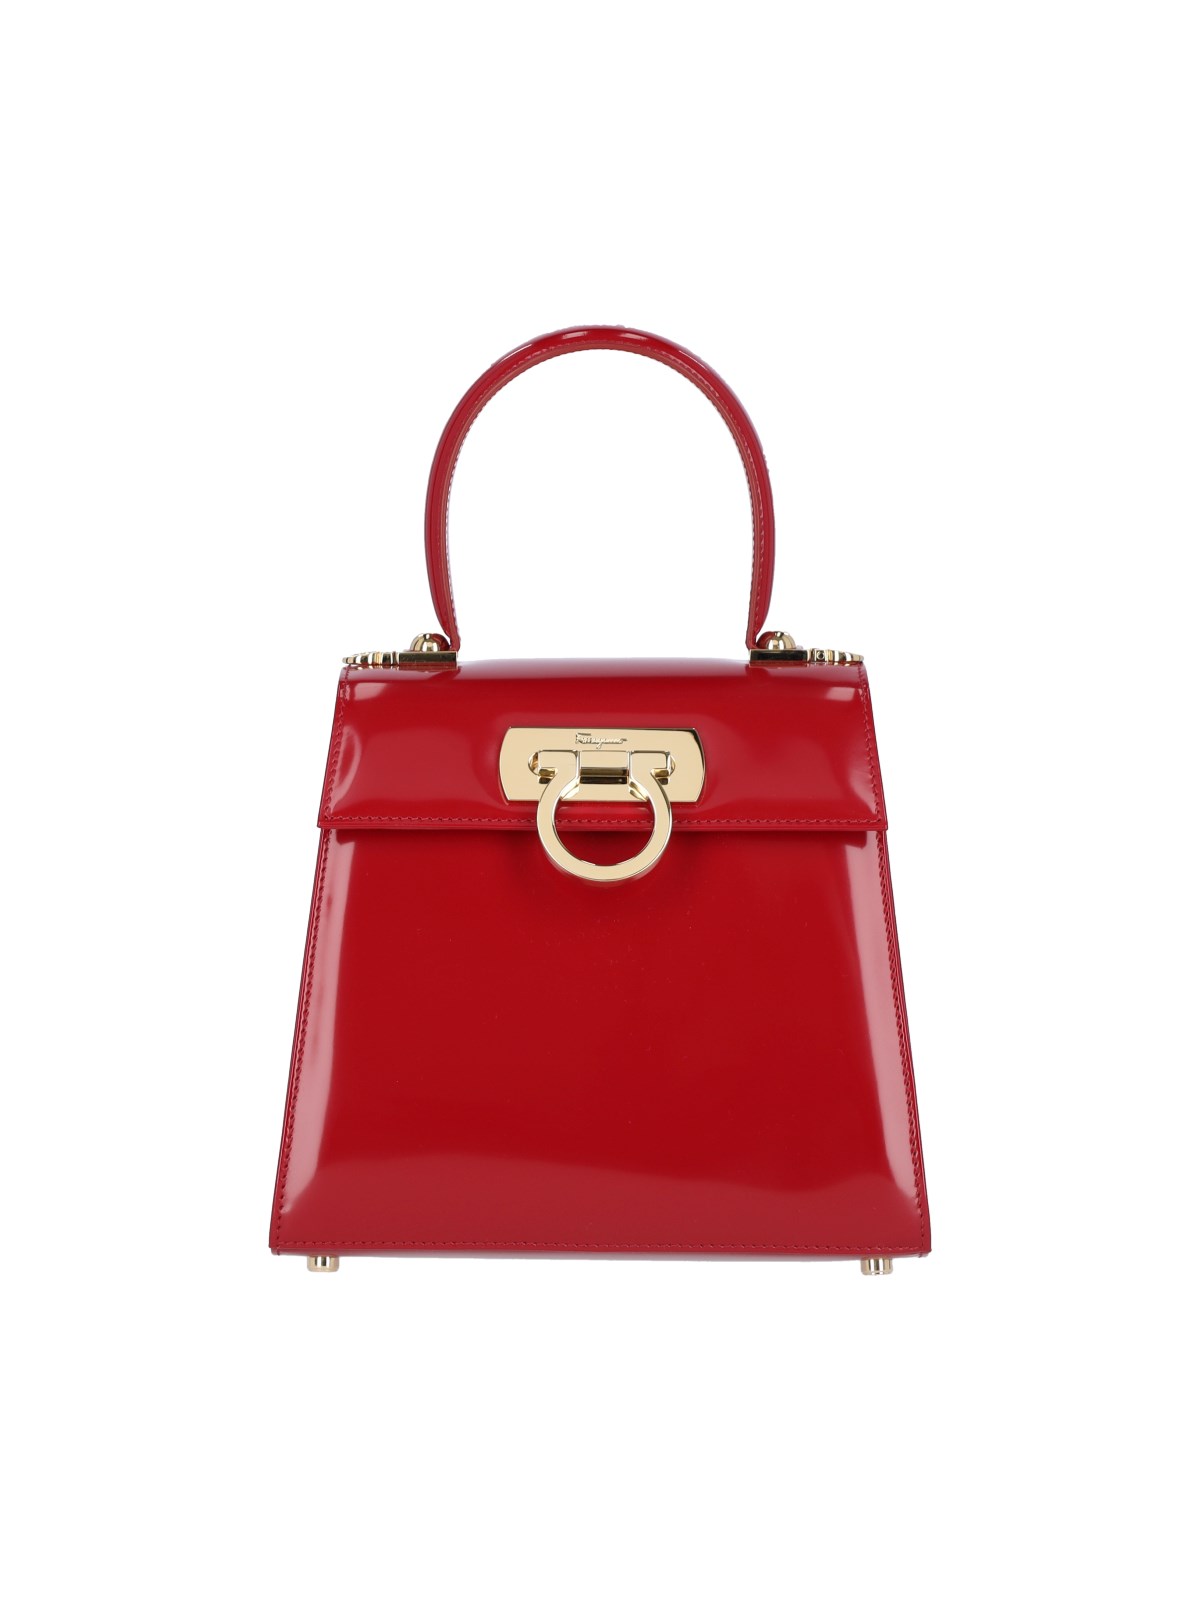 Ferragamo Iconic S Handbag In Red